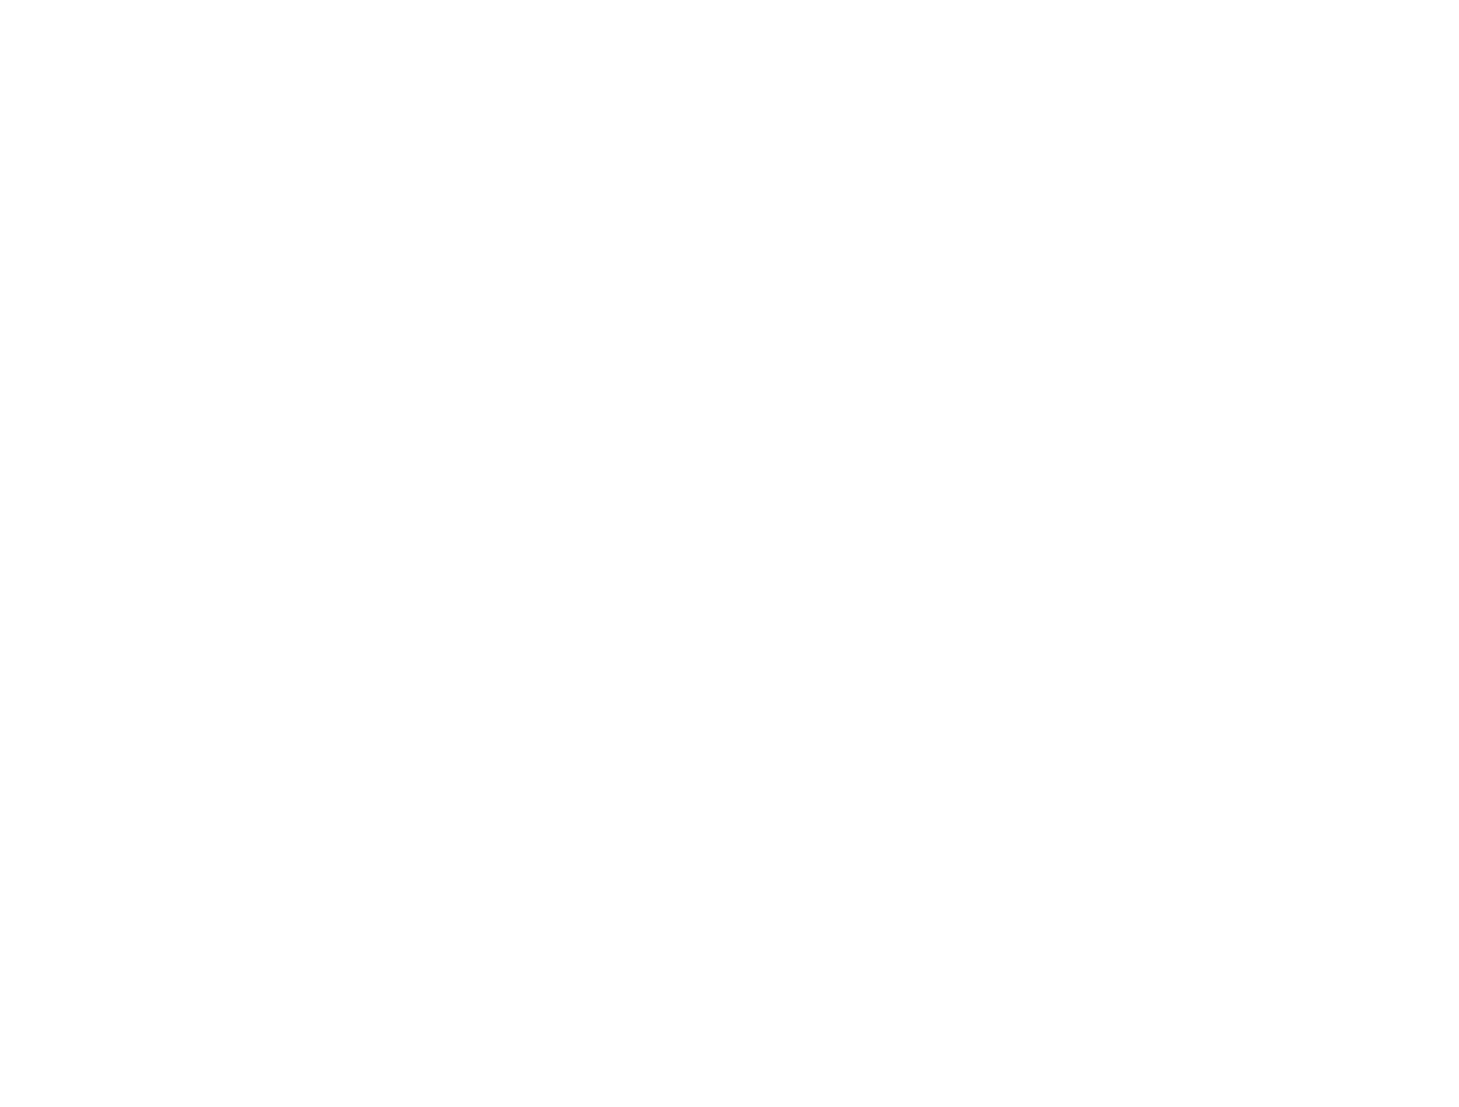 Graphic of three arrows